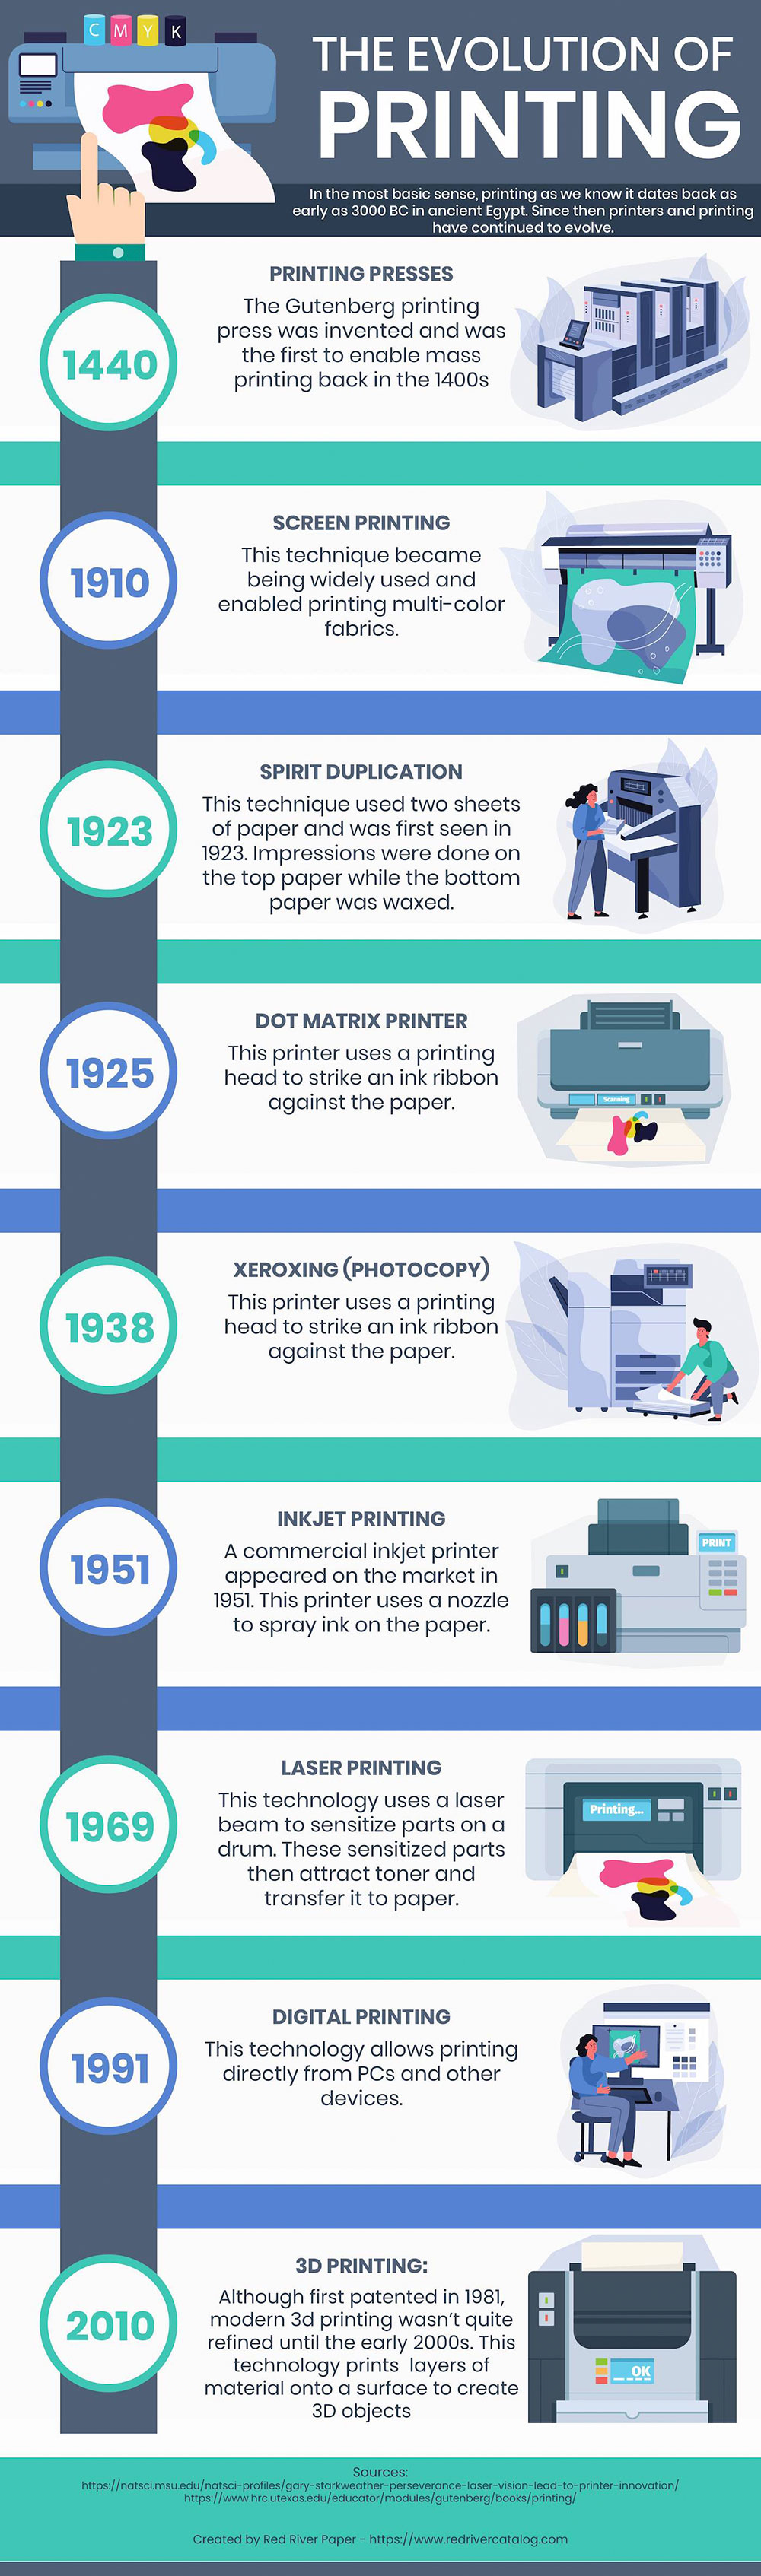 The Evolution of Printing